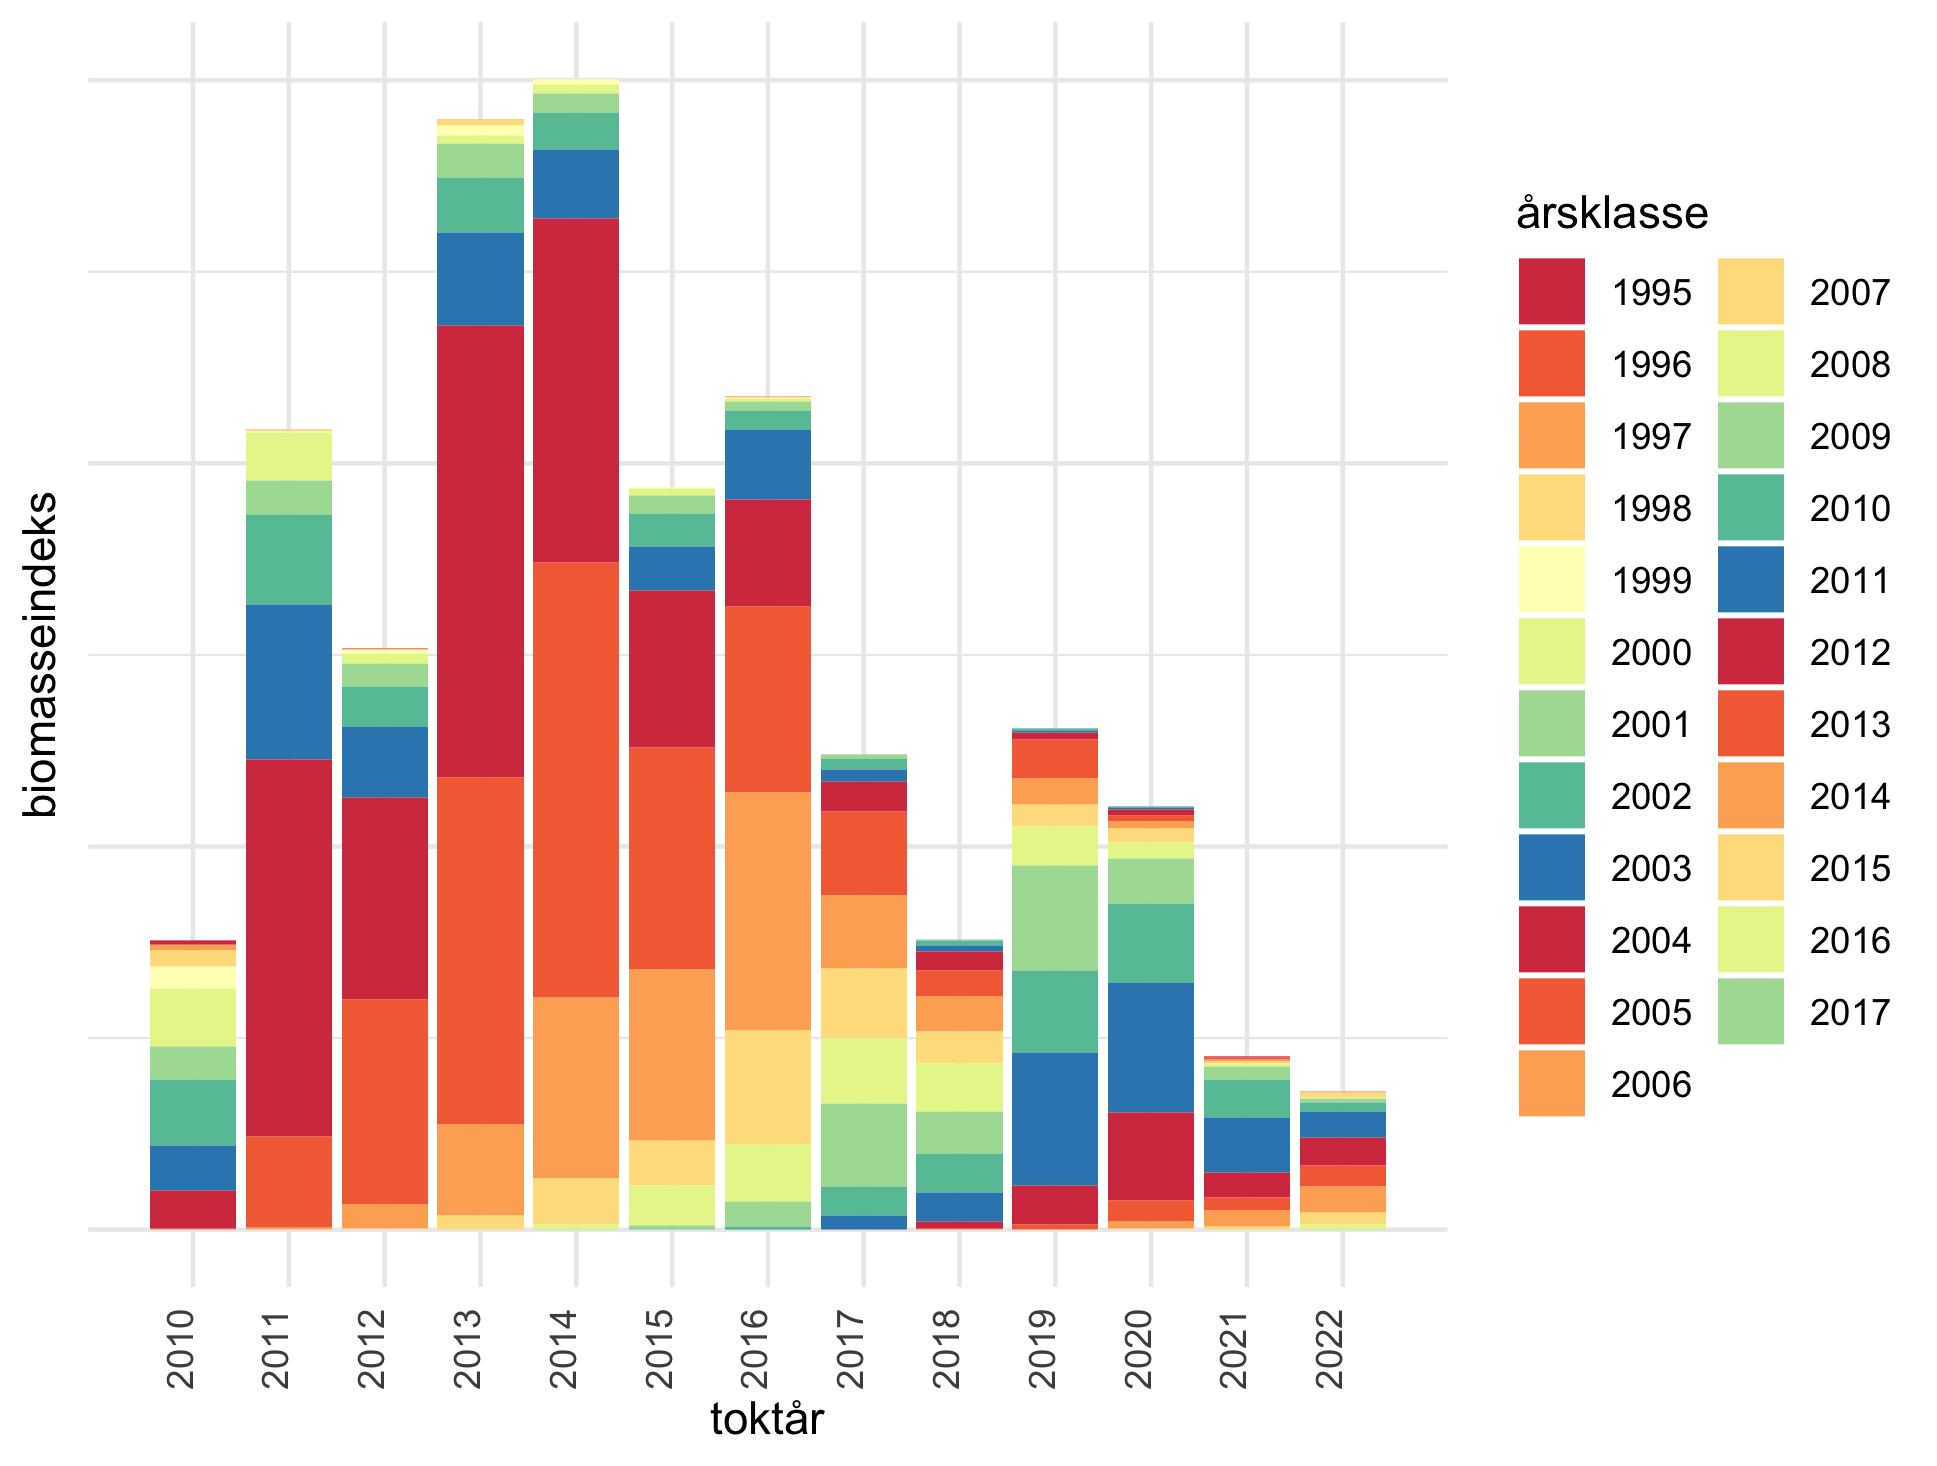 tidsserie biomasseindeks fordelt på årsklasser